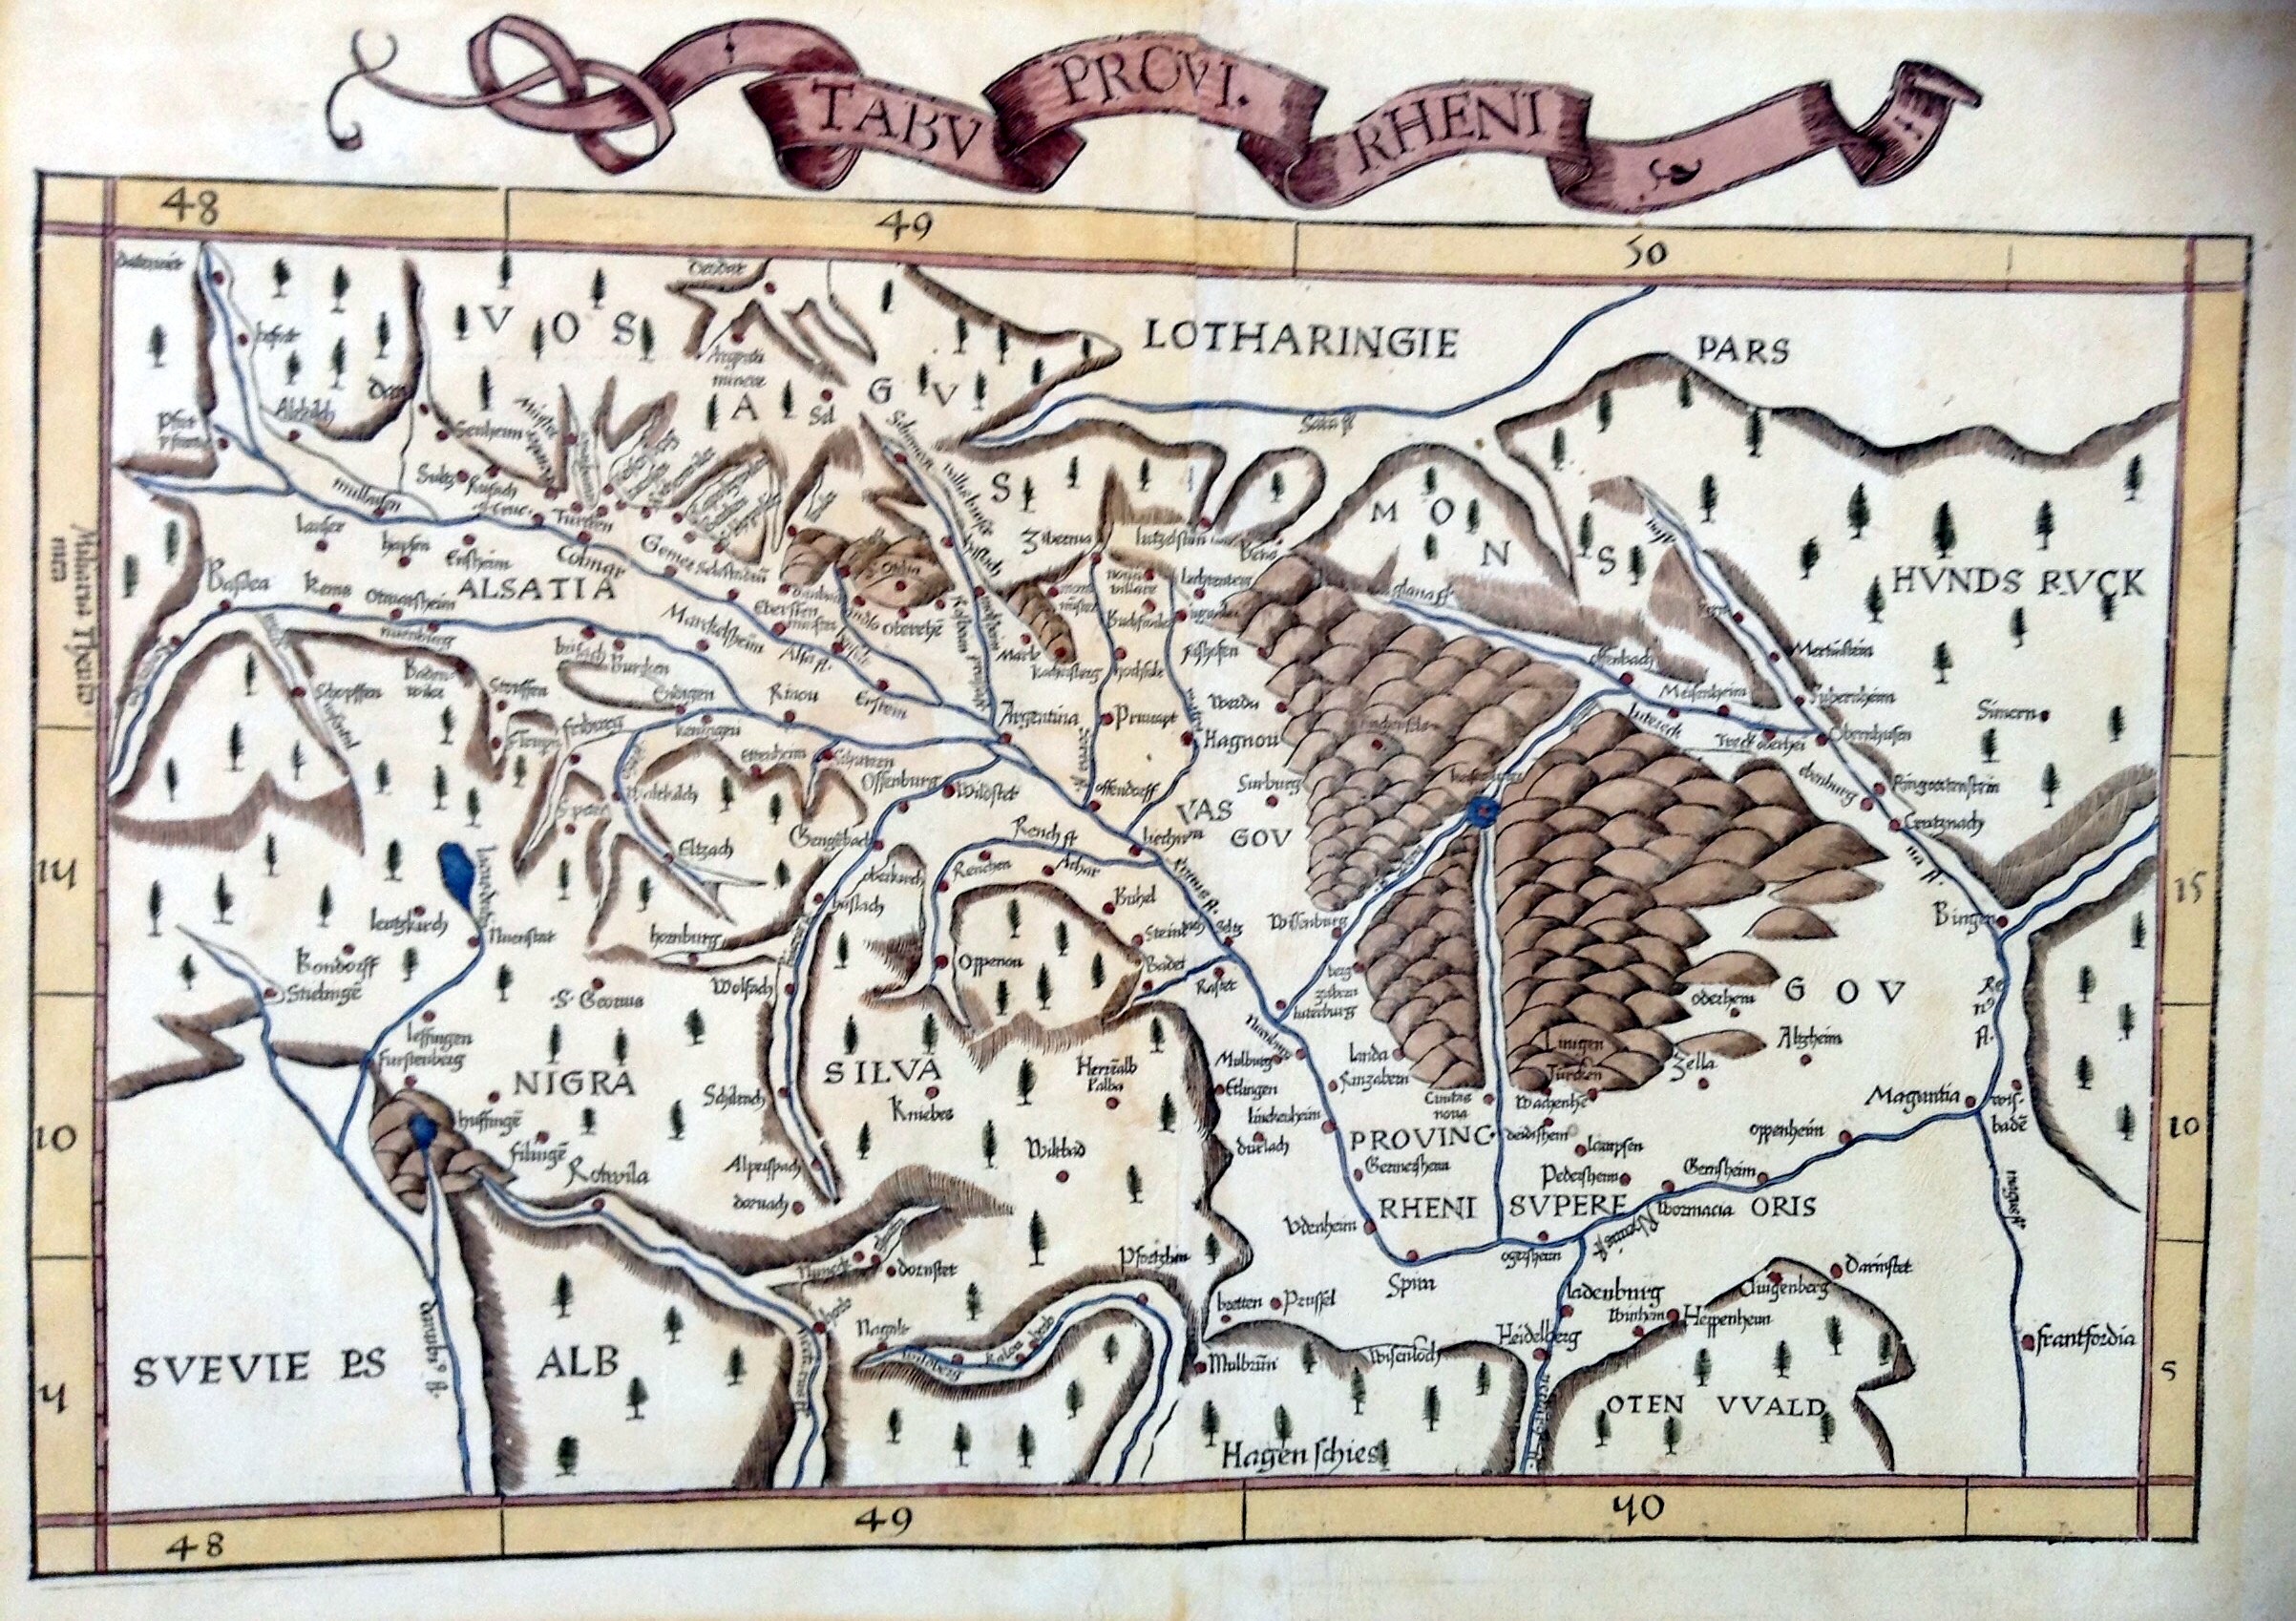 TABULA NOVA PARTICULARIS PROVINCIE RHEINI SUPERIORIS: Aus dem Atlas: „Geographia“ des Ptolemäus von Martin Waldseemüller, 1513